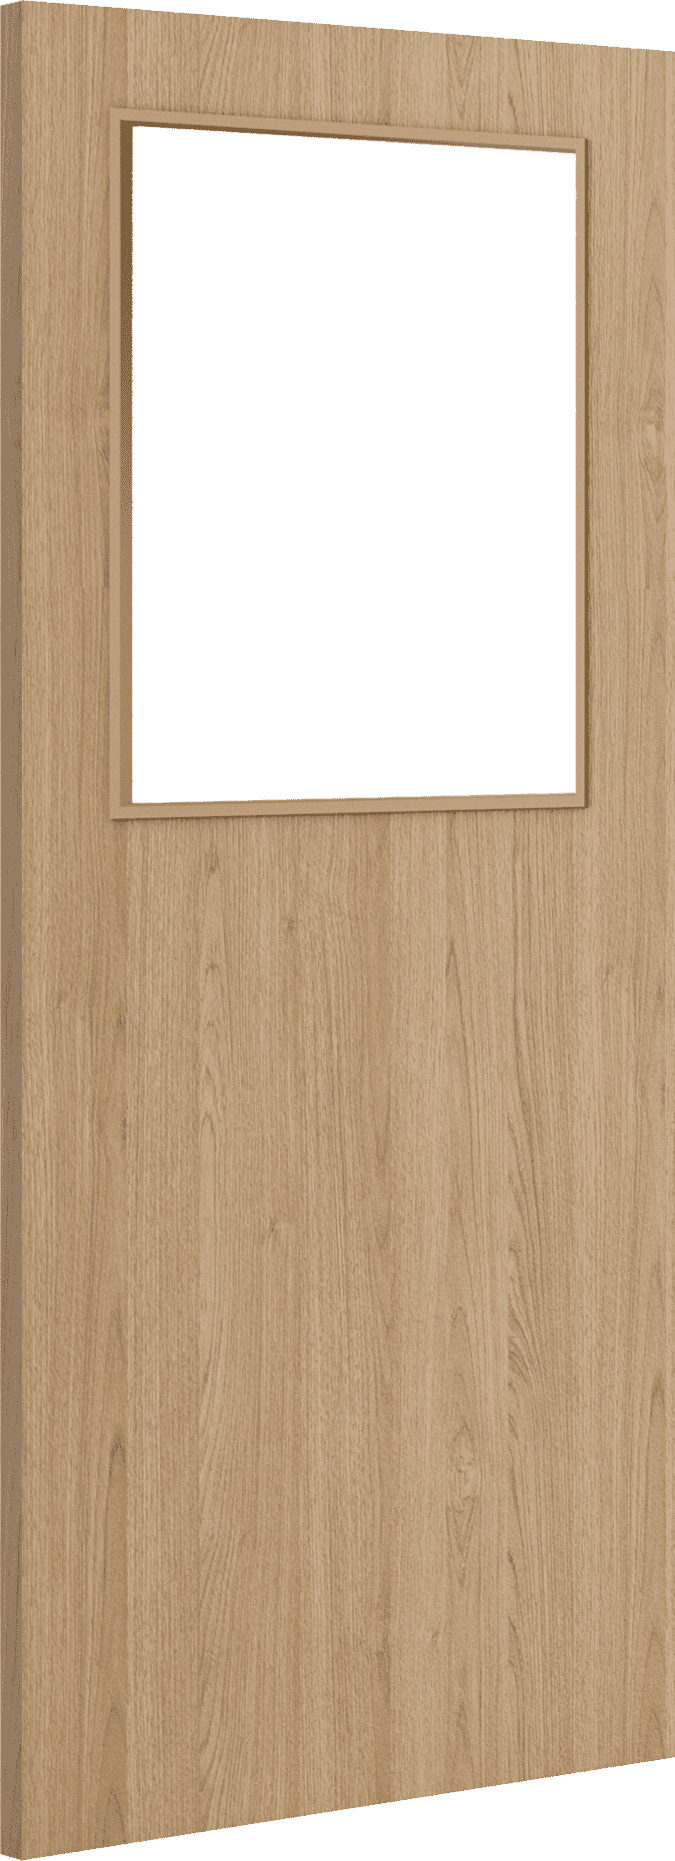 1981mm x 686mm x 44mm (27") Architectural Oak 01 Frosted Glazed - Prefinished FD30 Fire Door Blank